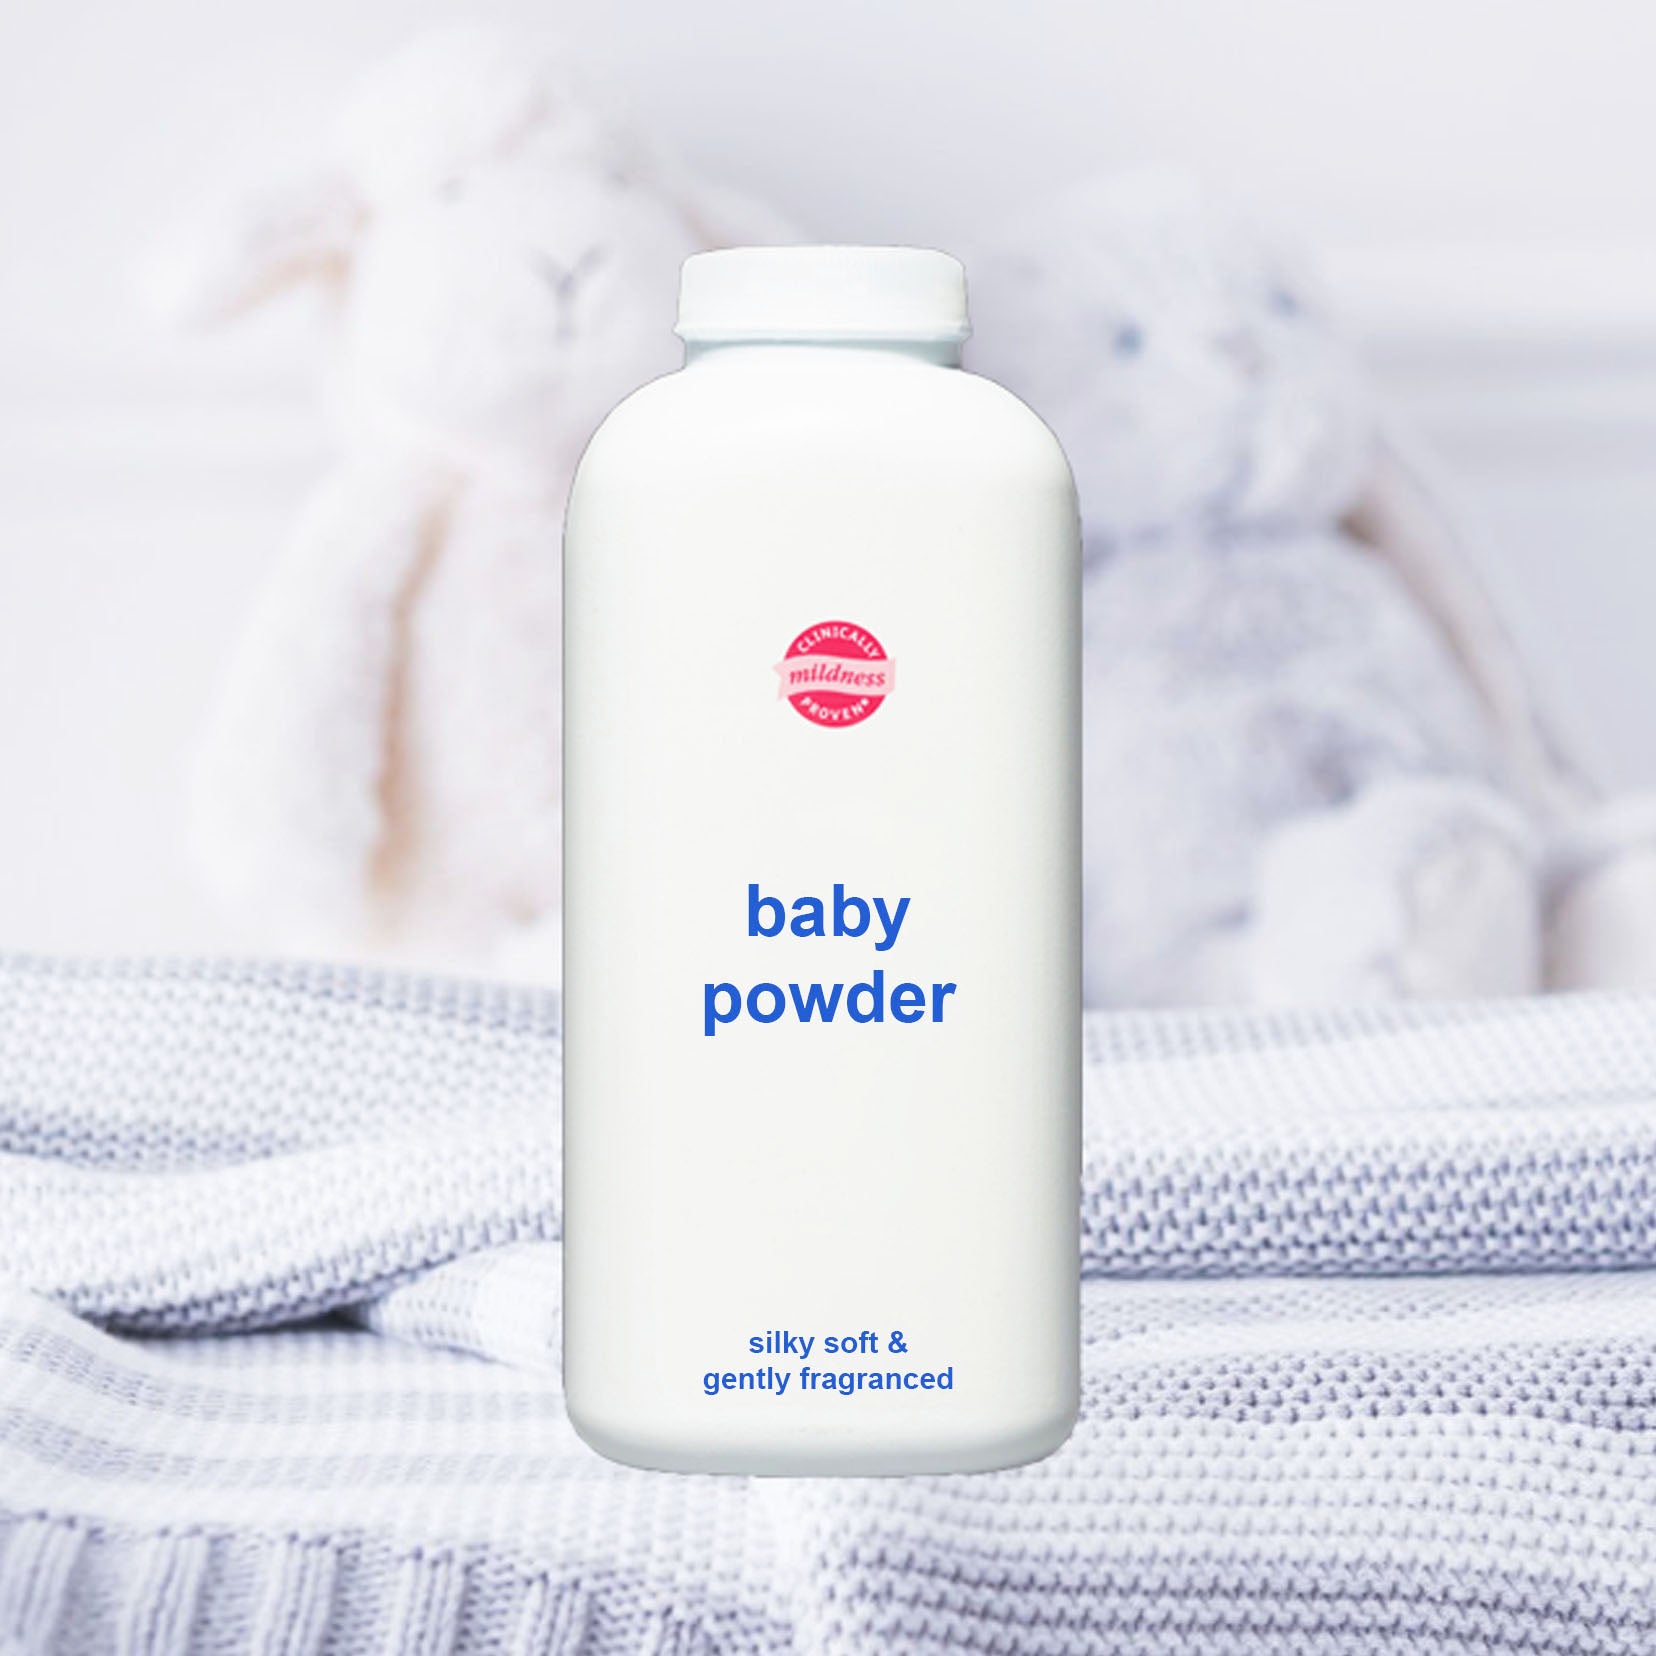 Buy Baby Powder Fragrance Oils Online - Powder Fragrance Suppliers